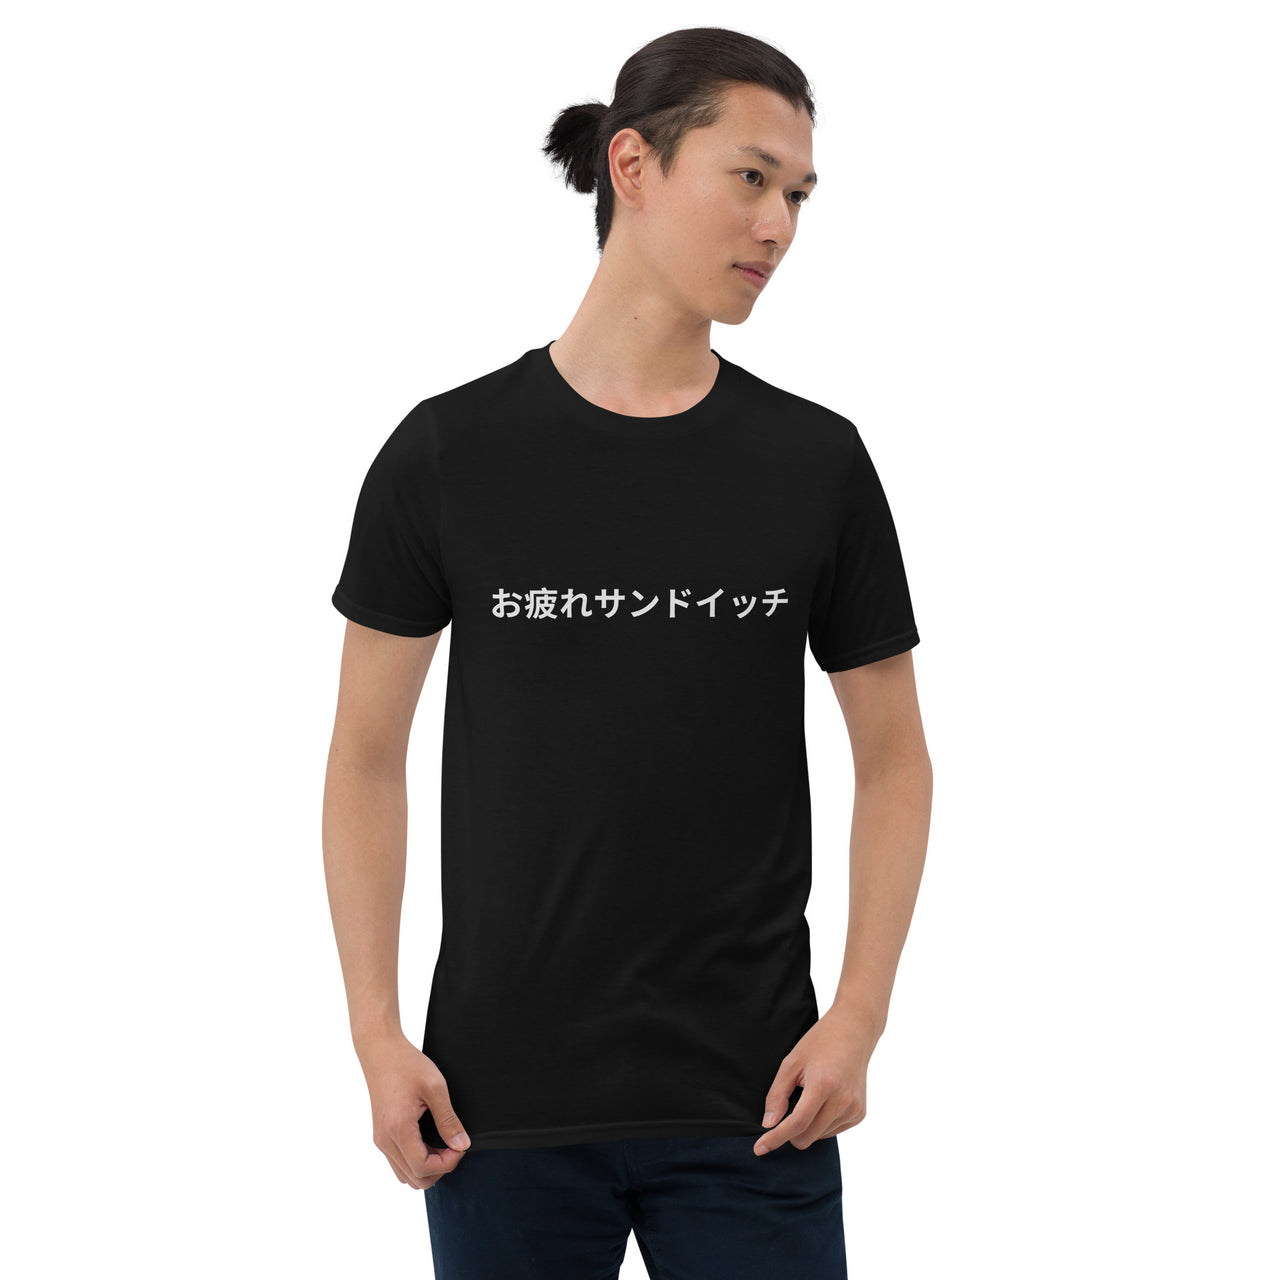 Good Work Sandwich in Japanese T-Shirt